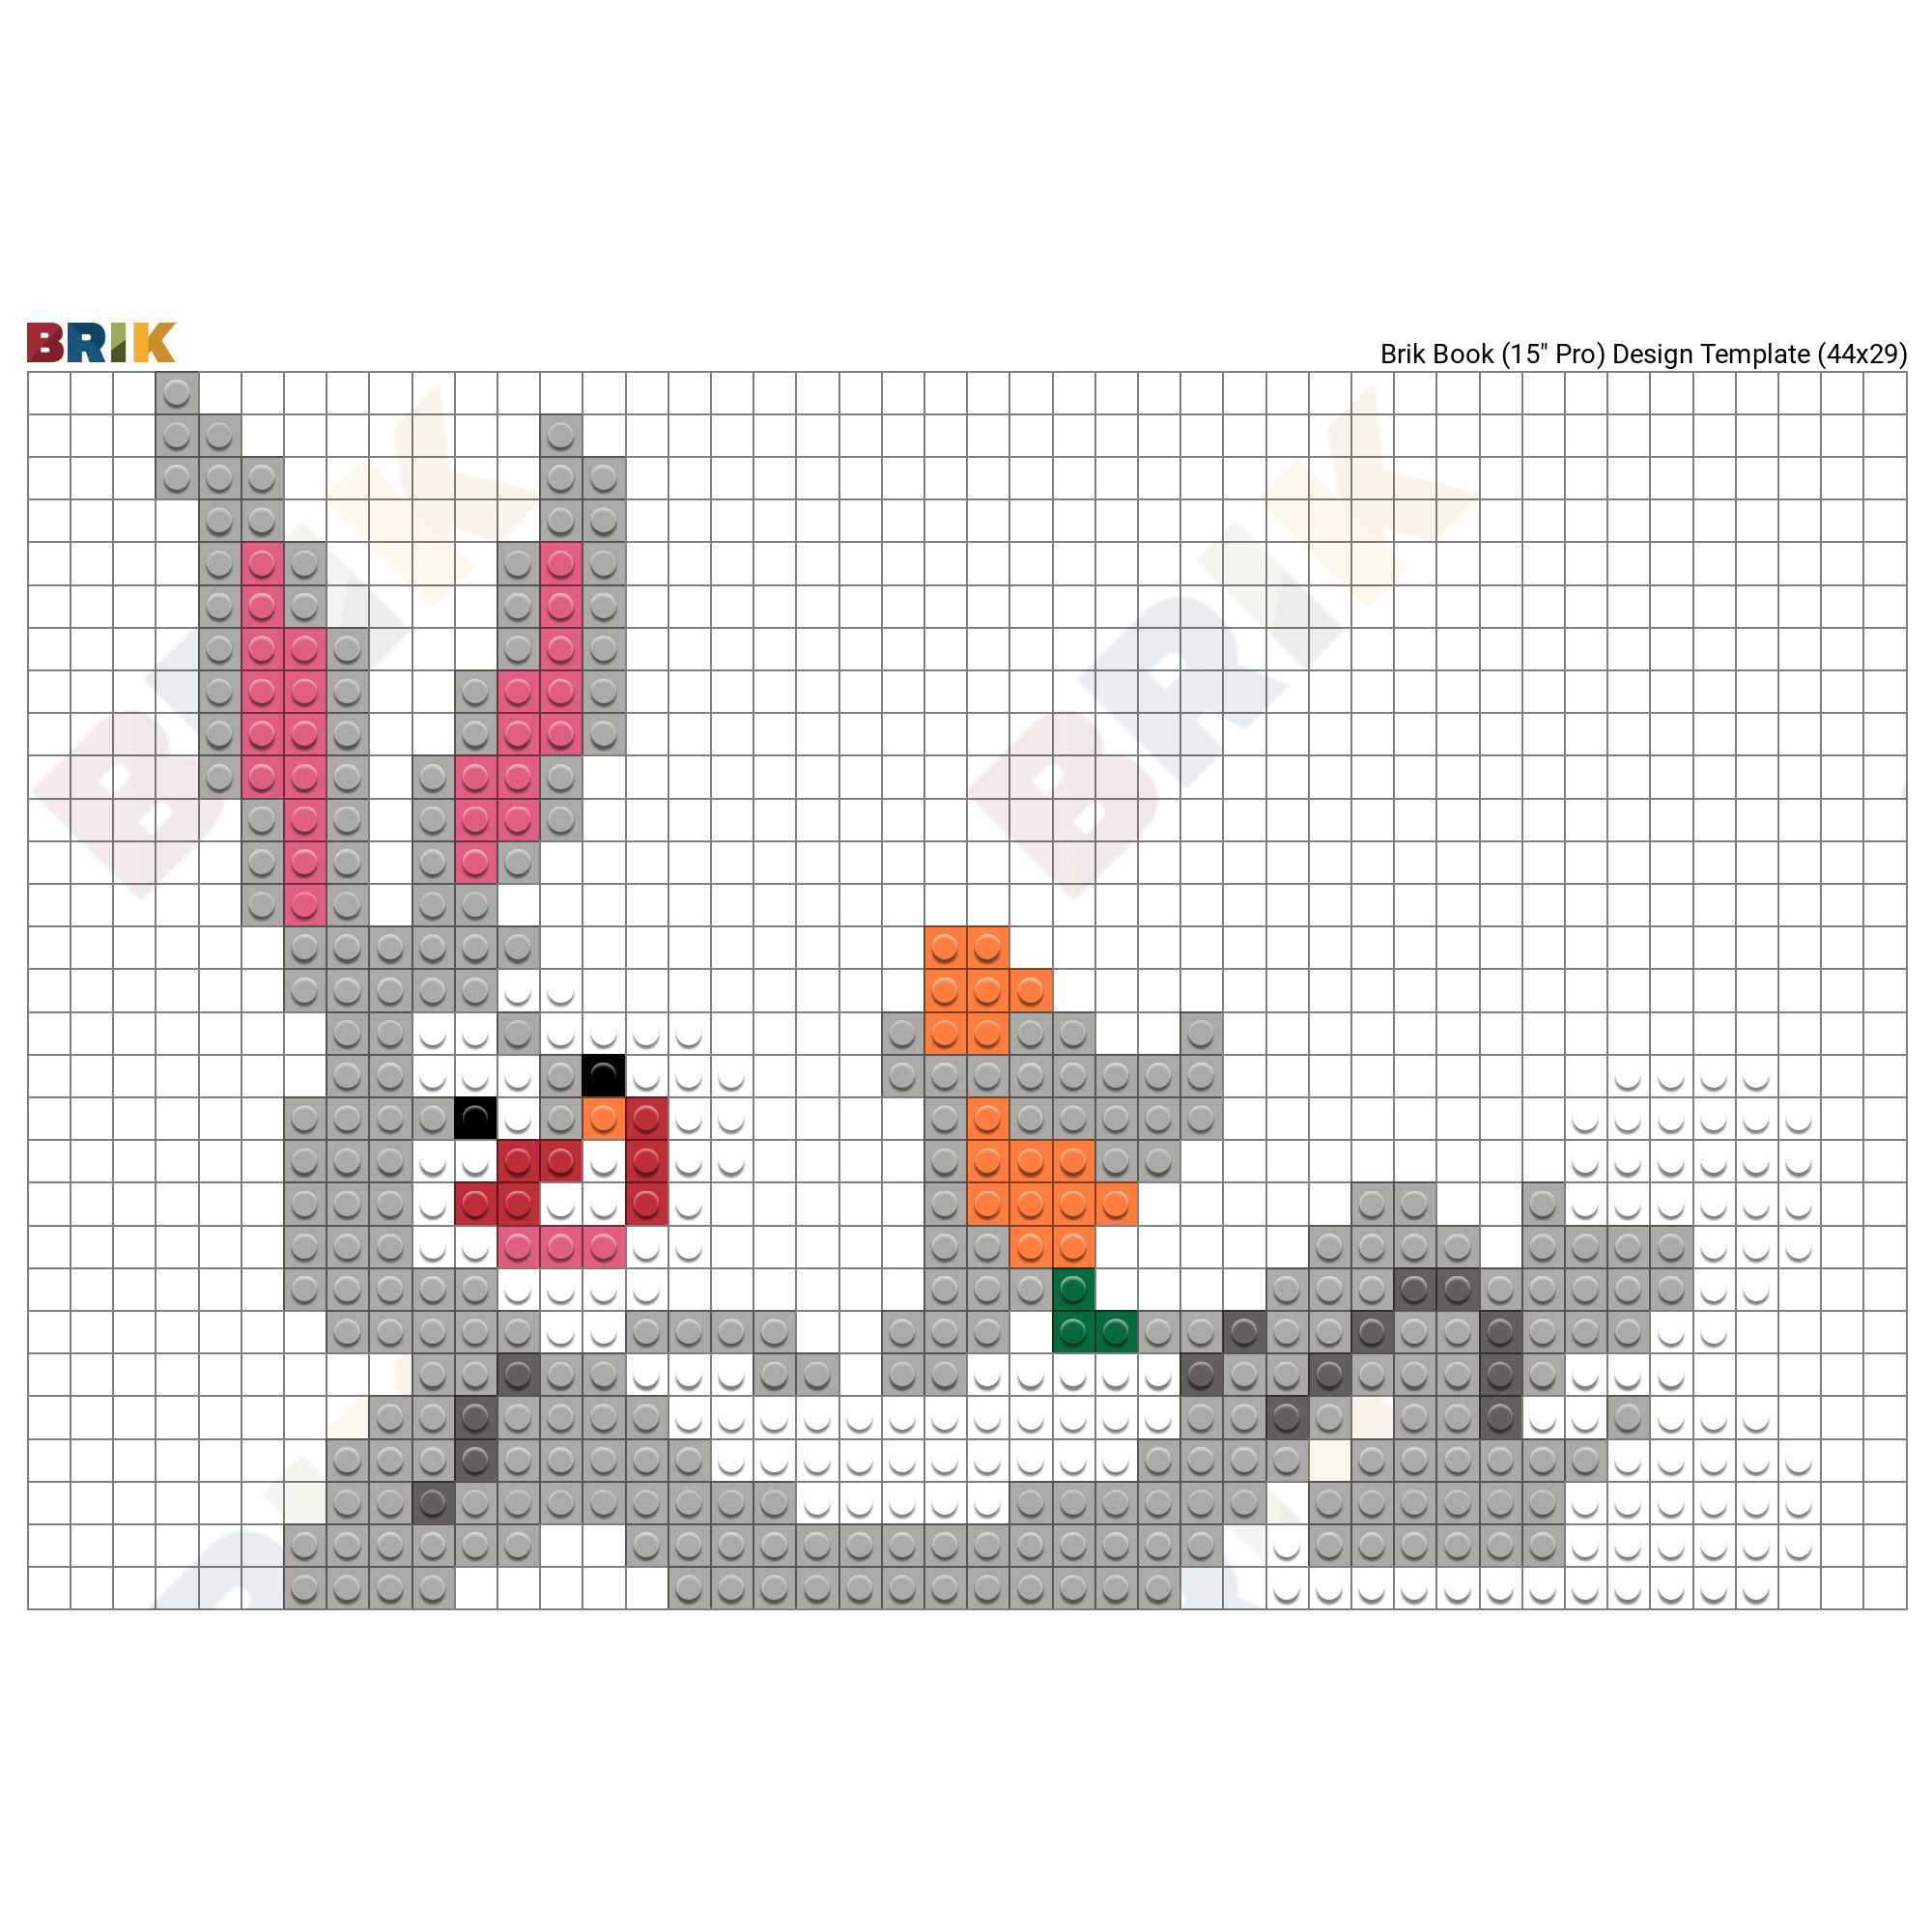 Bugs bunny c2c  Pixel art, Pixel art grid, Pixel art templates